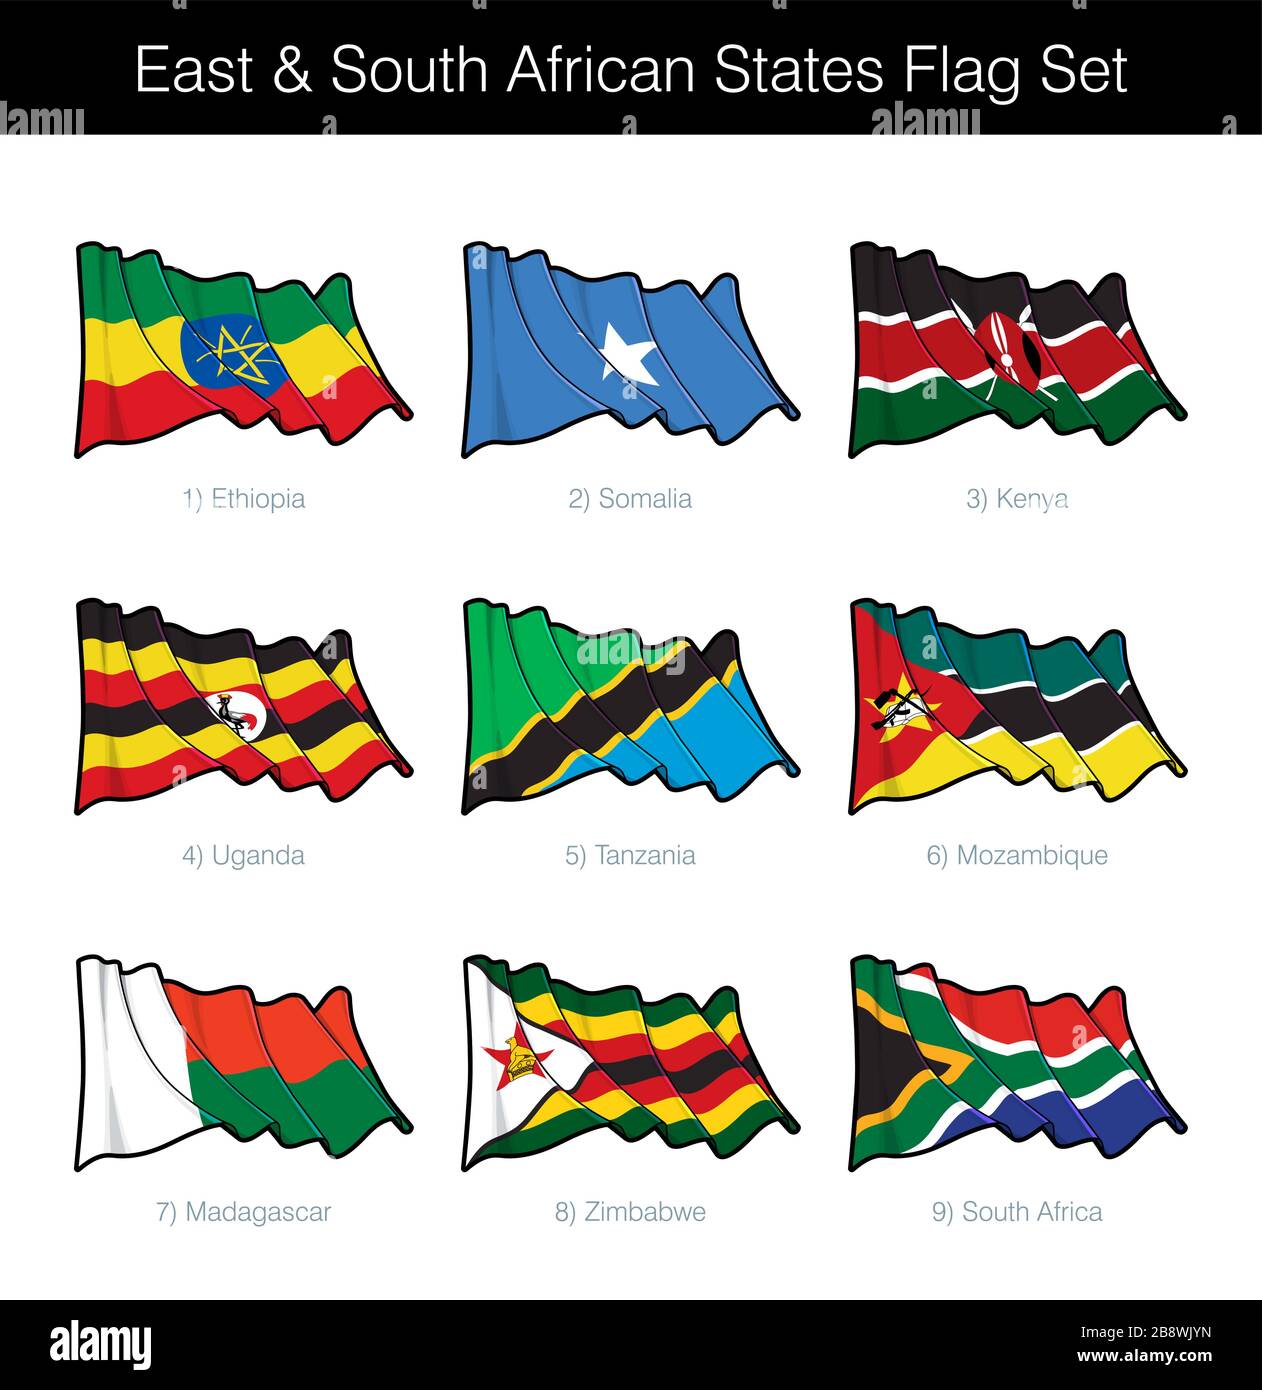 East and South African States Waving Flag Set. The set includes the flags of Ethiopia, Somalia, Kenya, Uganda, Tanzania, Mozambique, Madagascar, Zimba Stock Vector